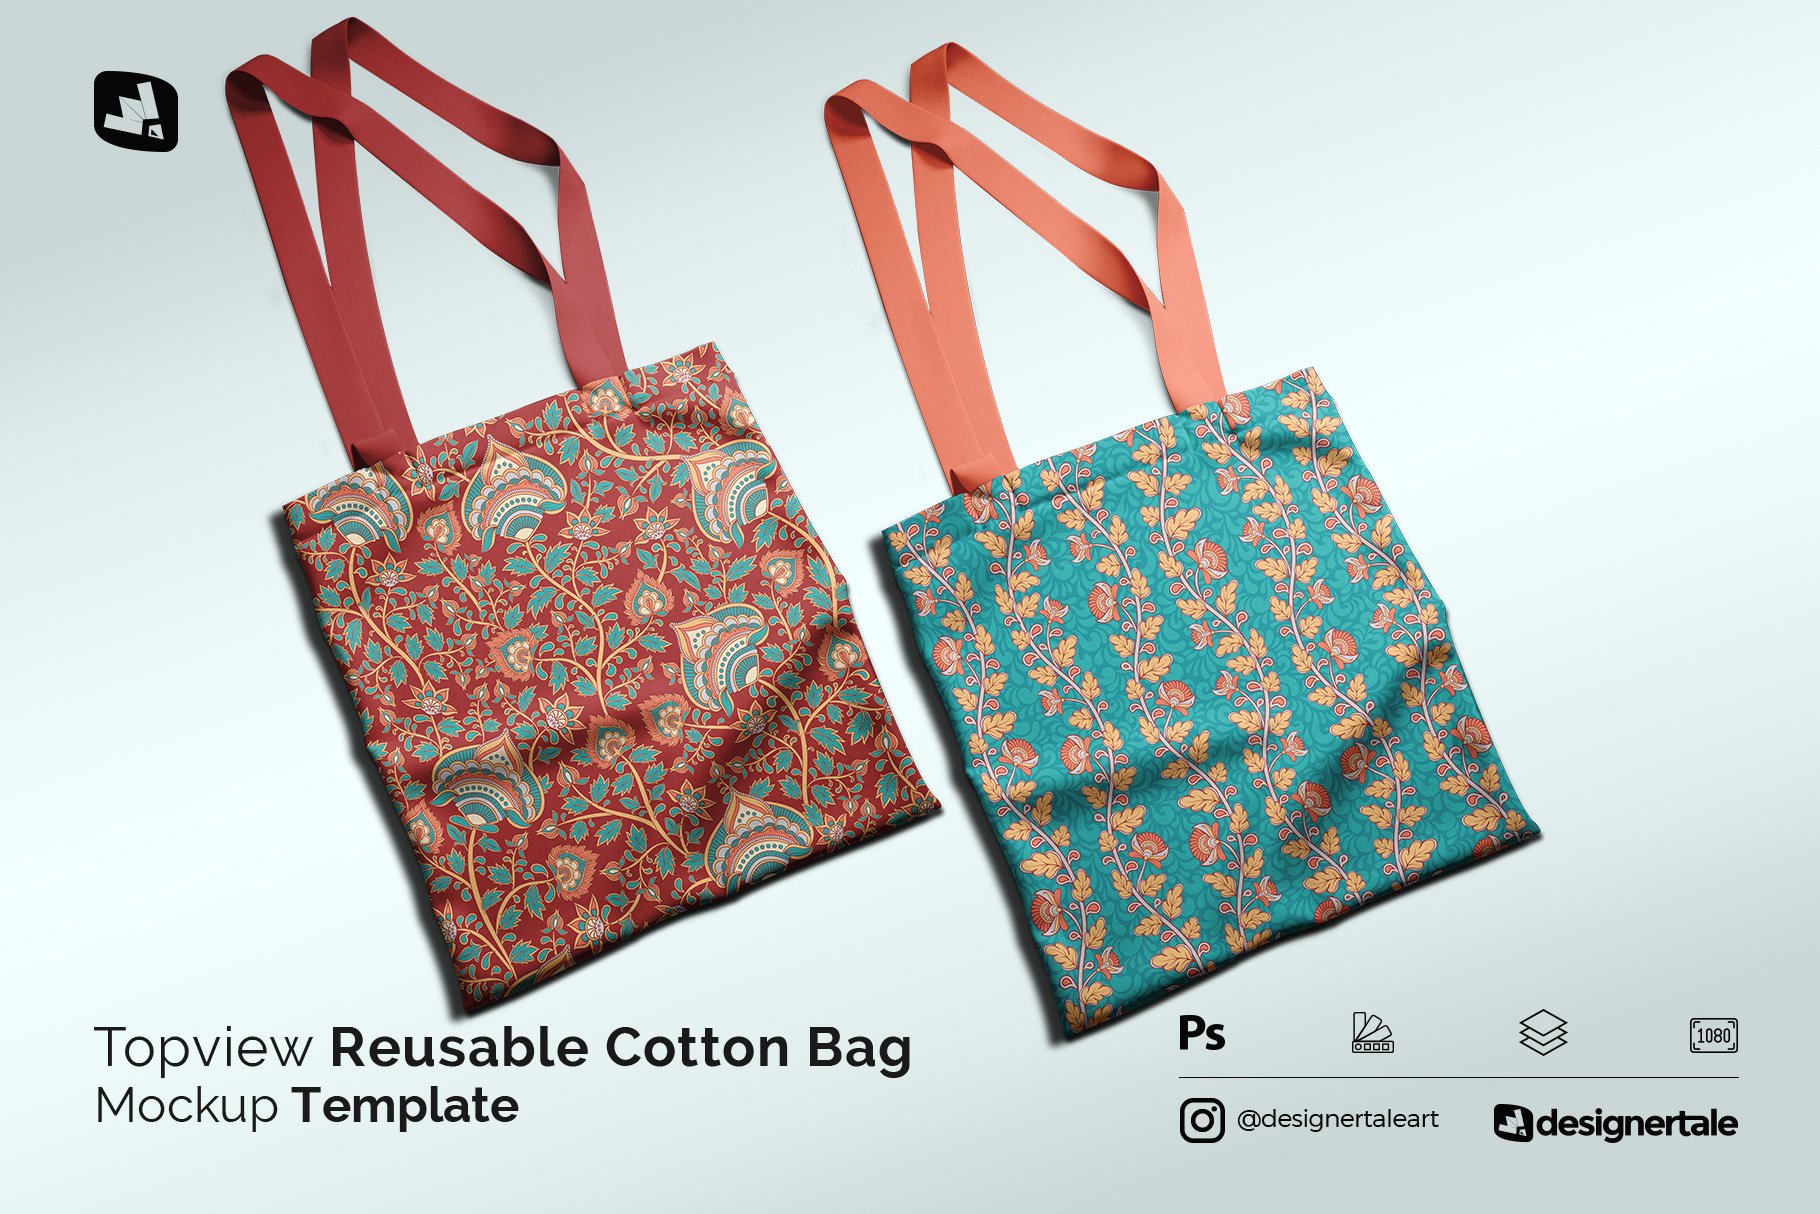 Topview Reusable Cotton Bag Mockup